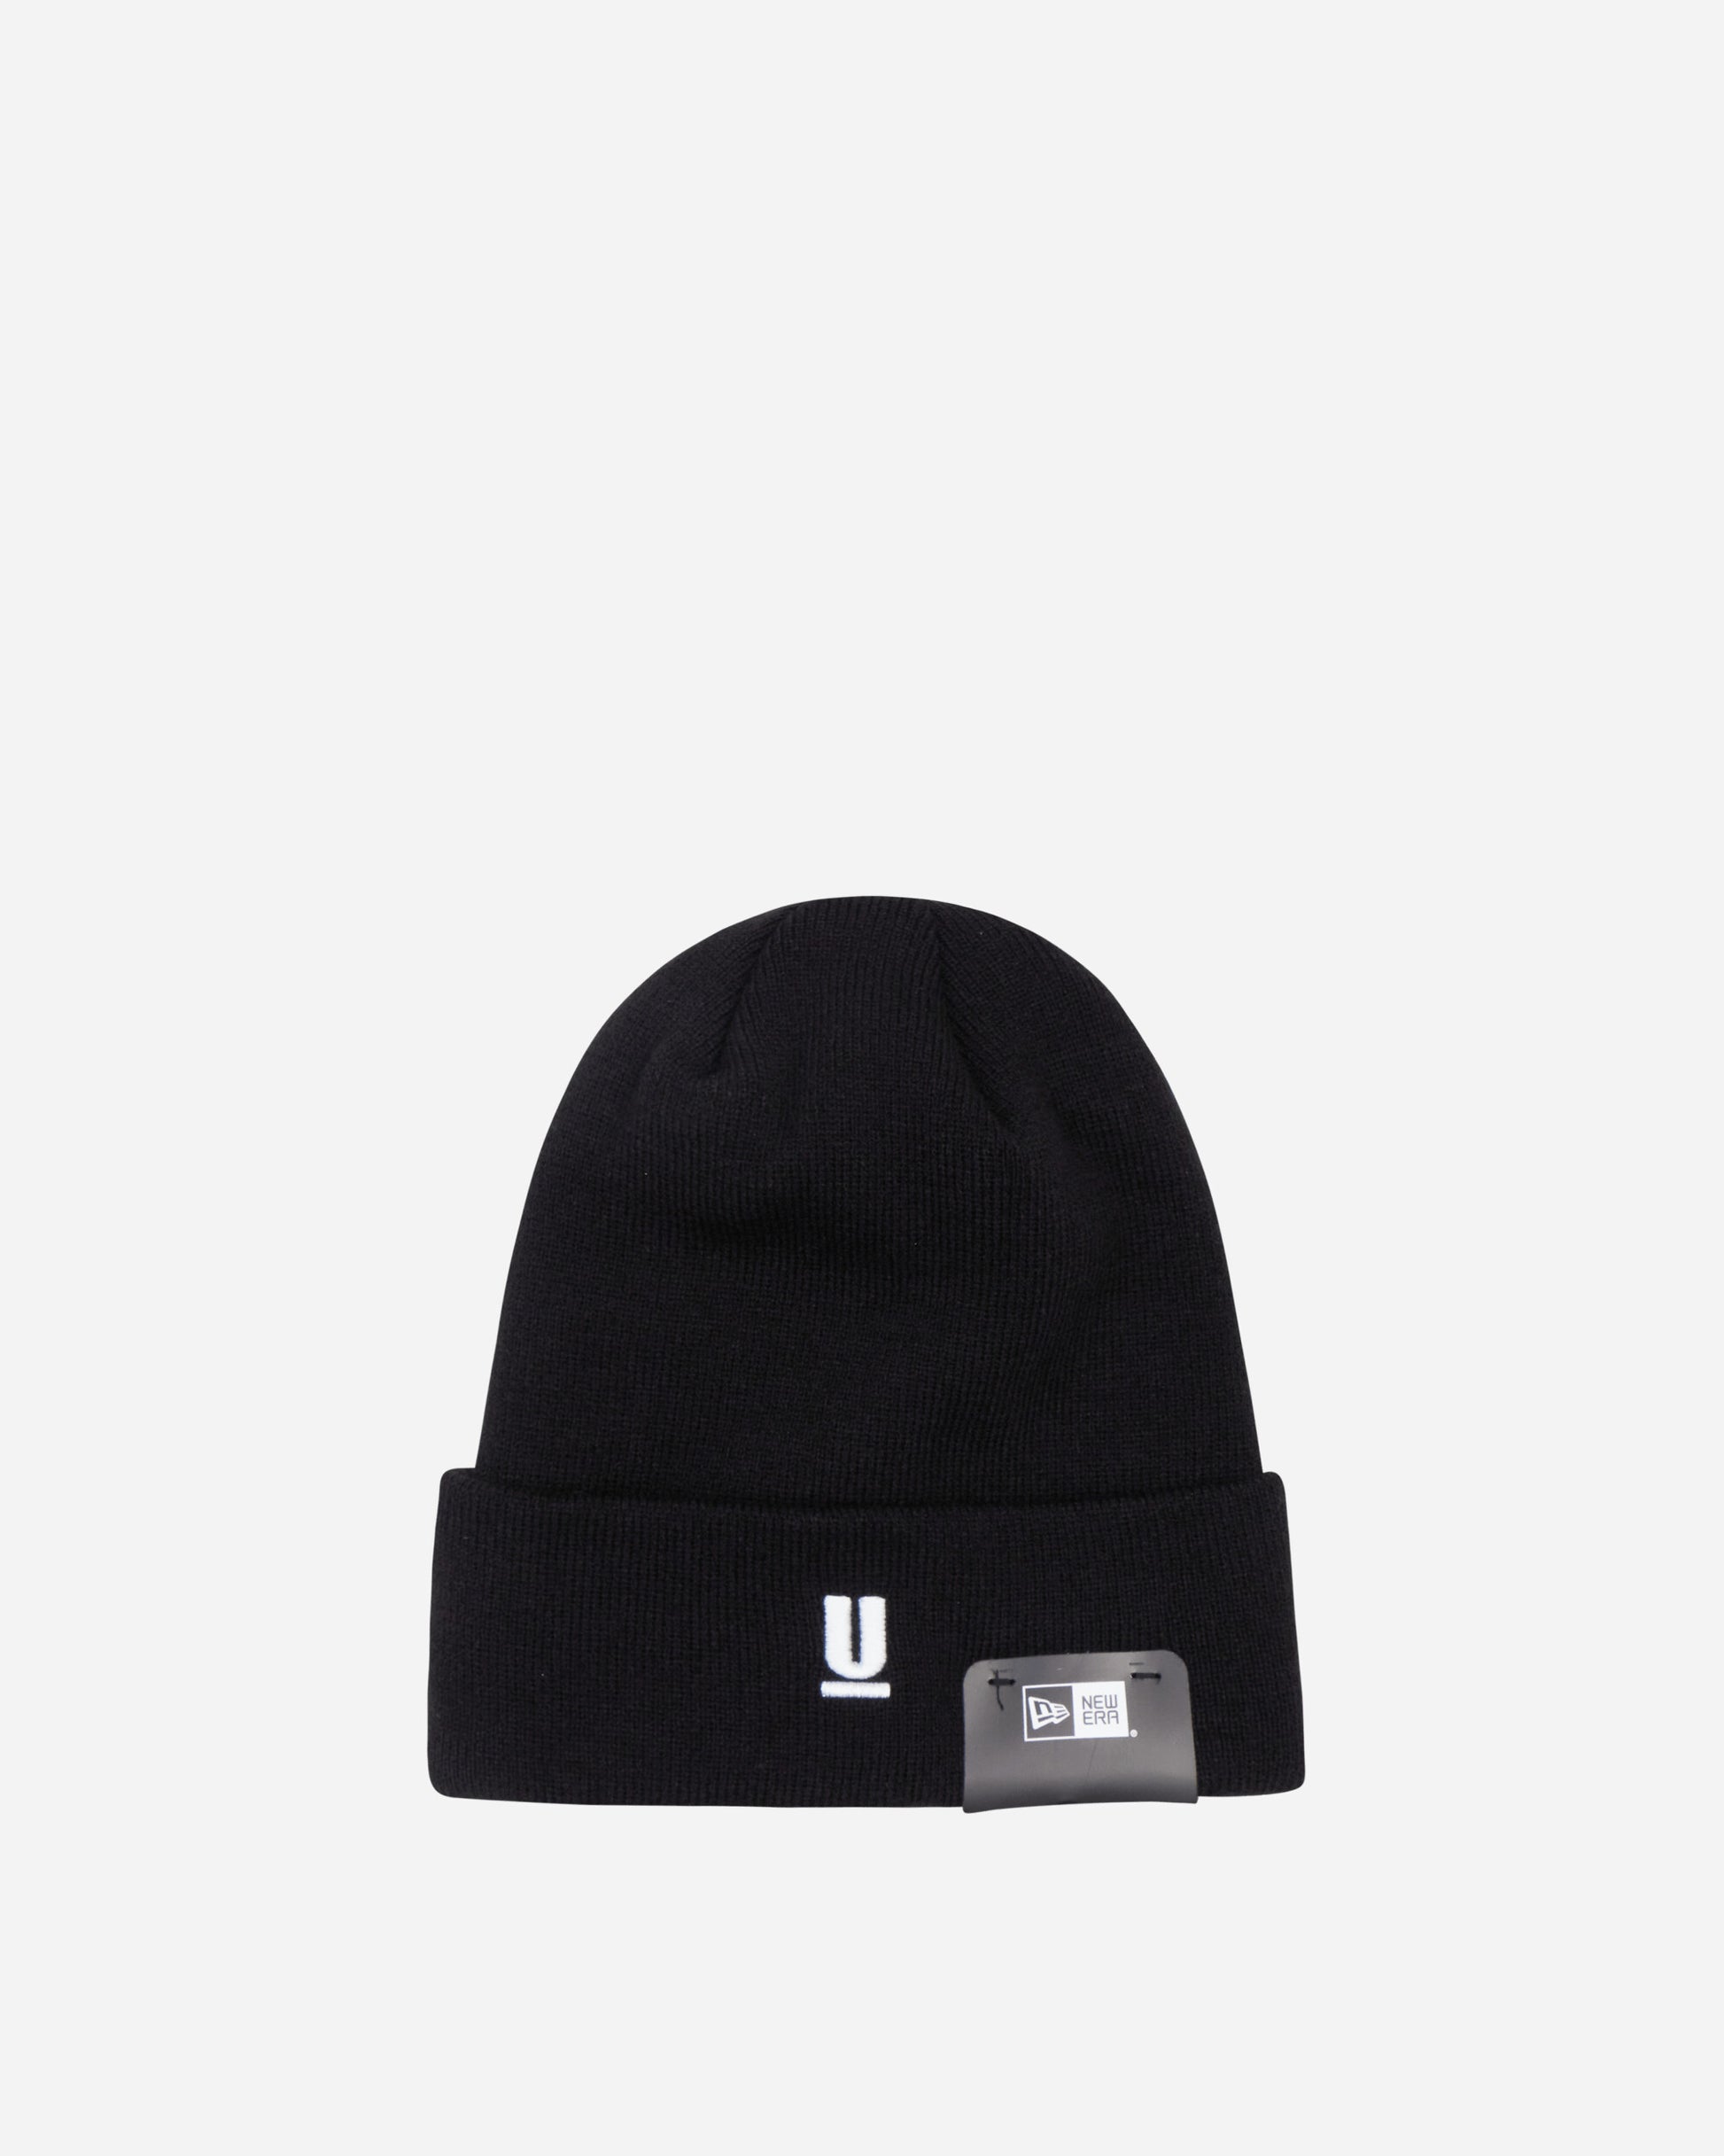 Undercover U Signature Beanie Black Hats Beanies UB0D6H03-1 1